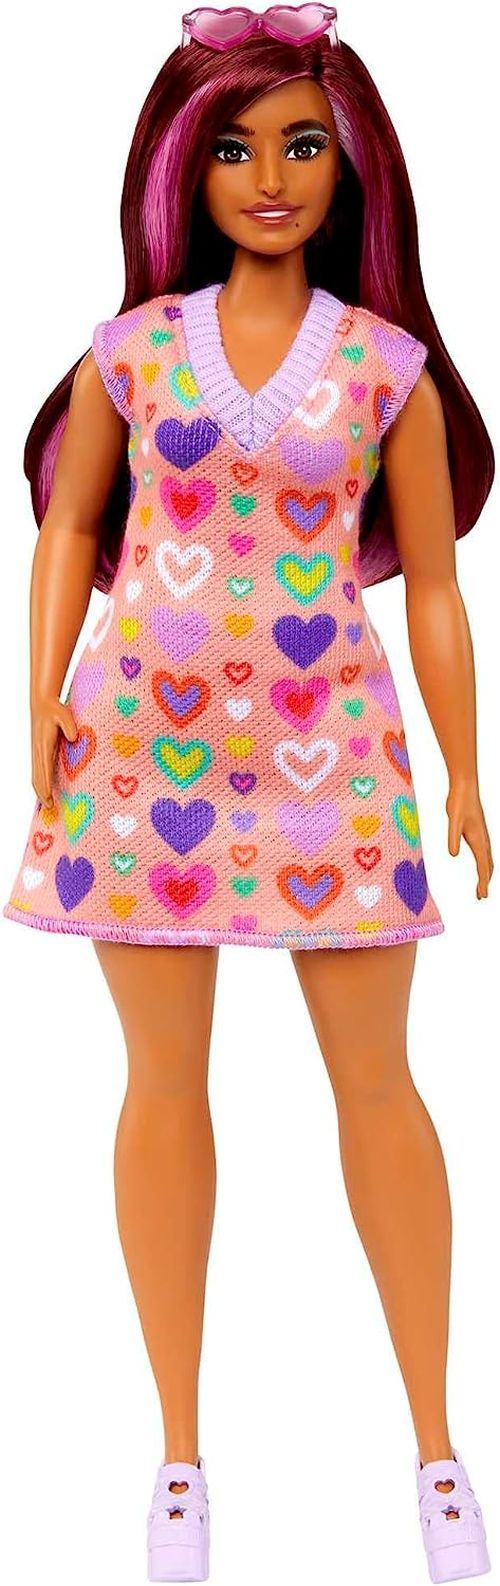 MATTEL Barbie In A Heart Colored Dress - BARBIE DOLLS